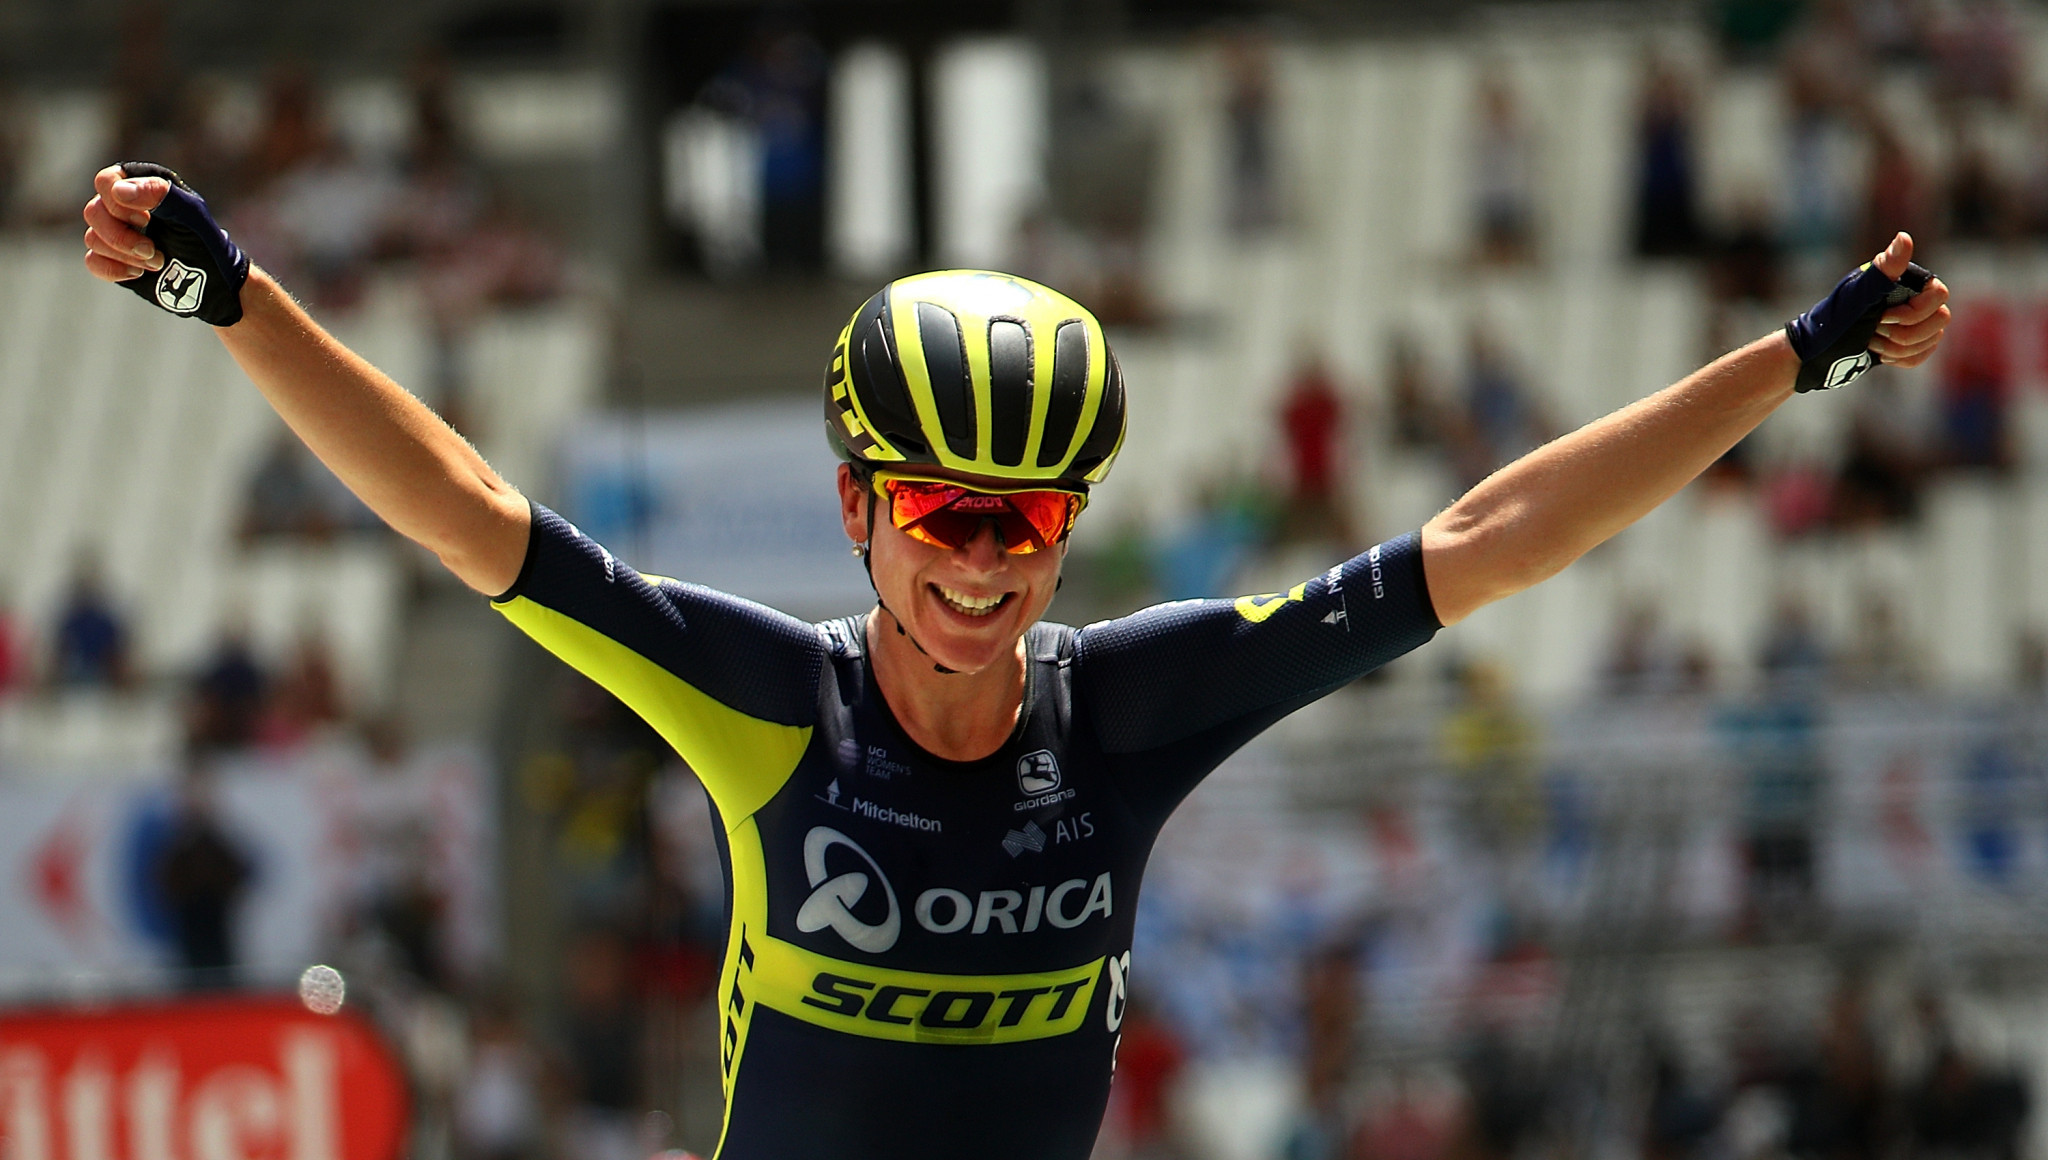 Van Vleuten wins first stage of UCI Holland Ladies Tour